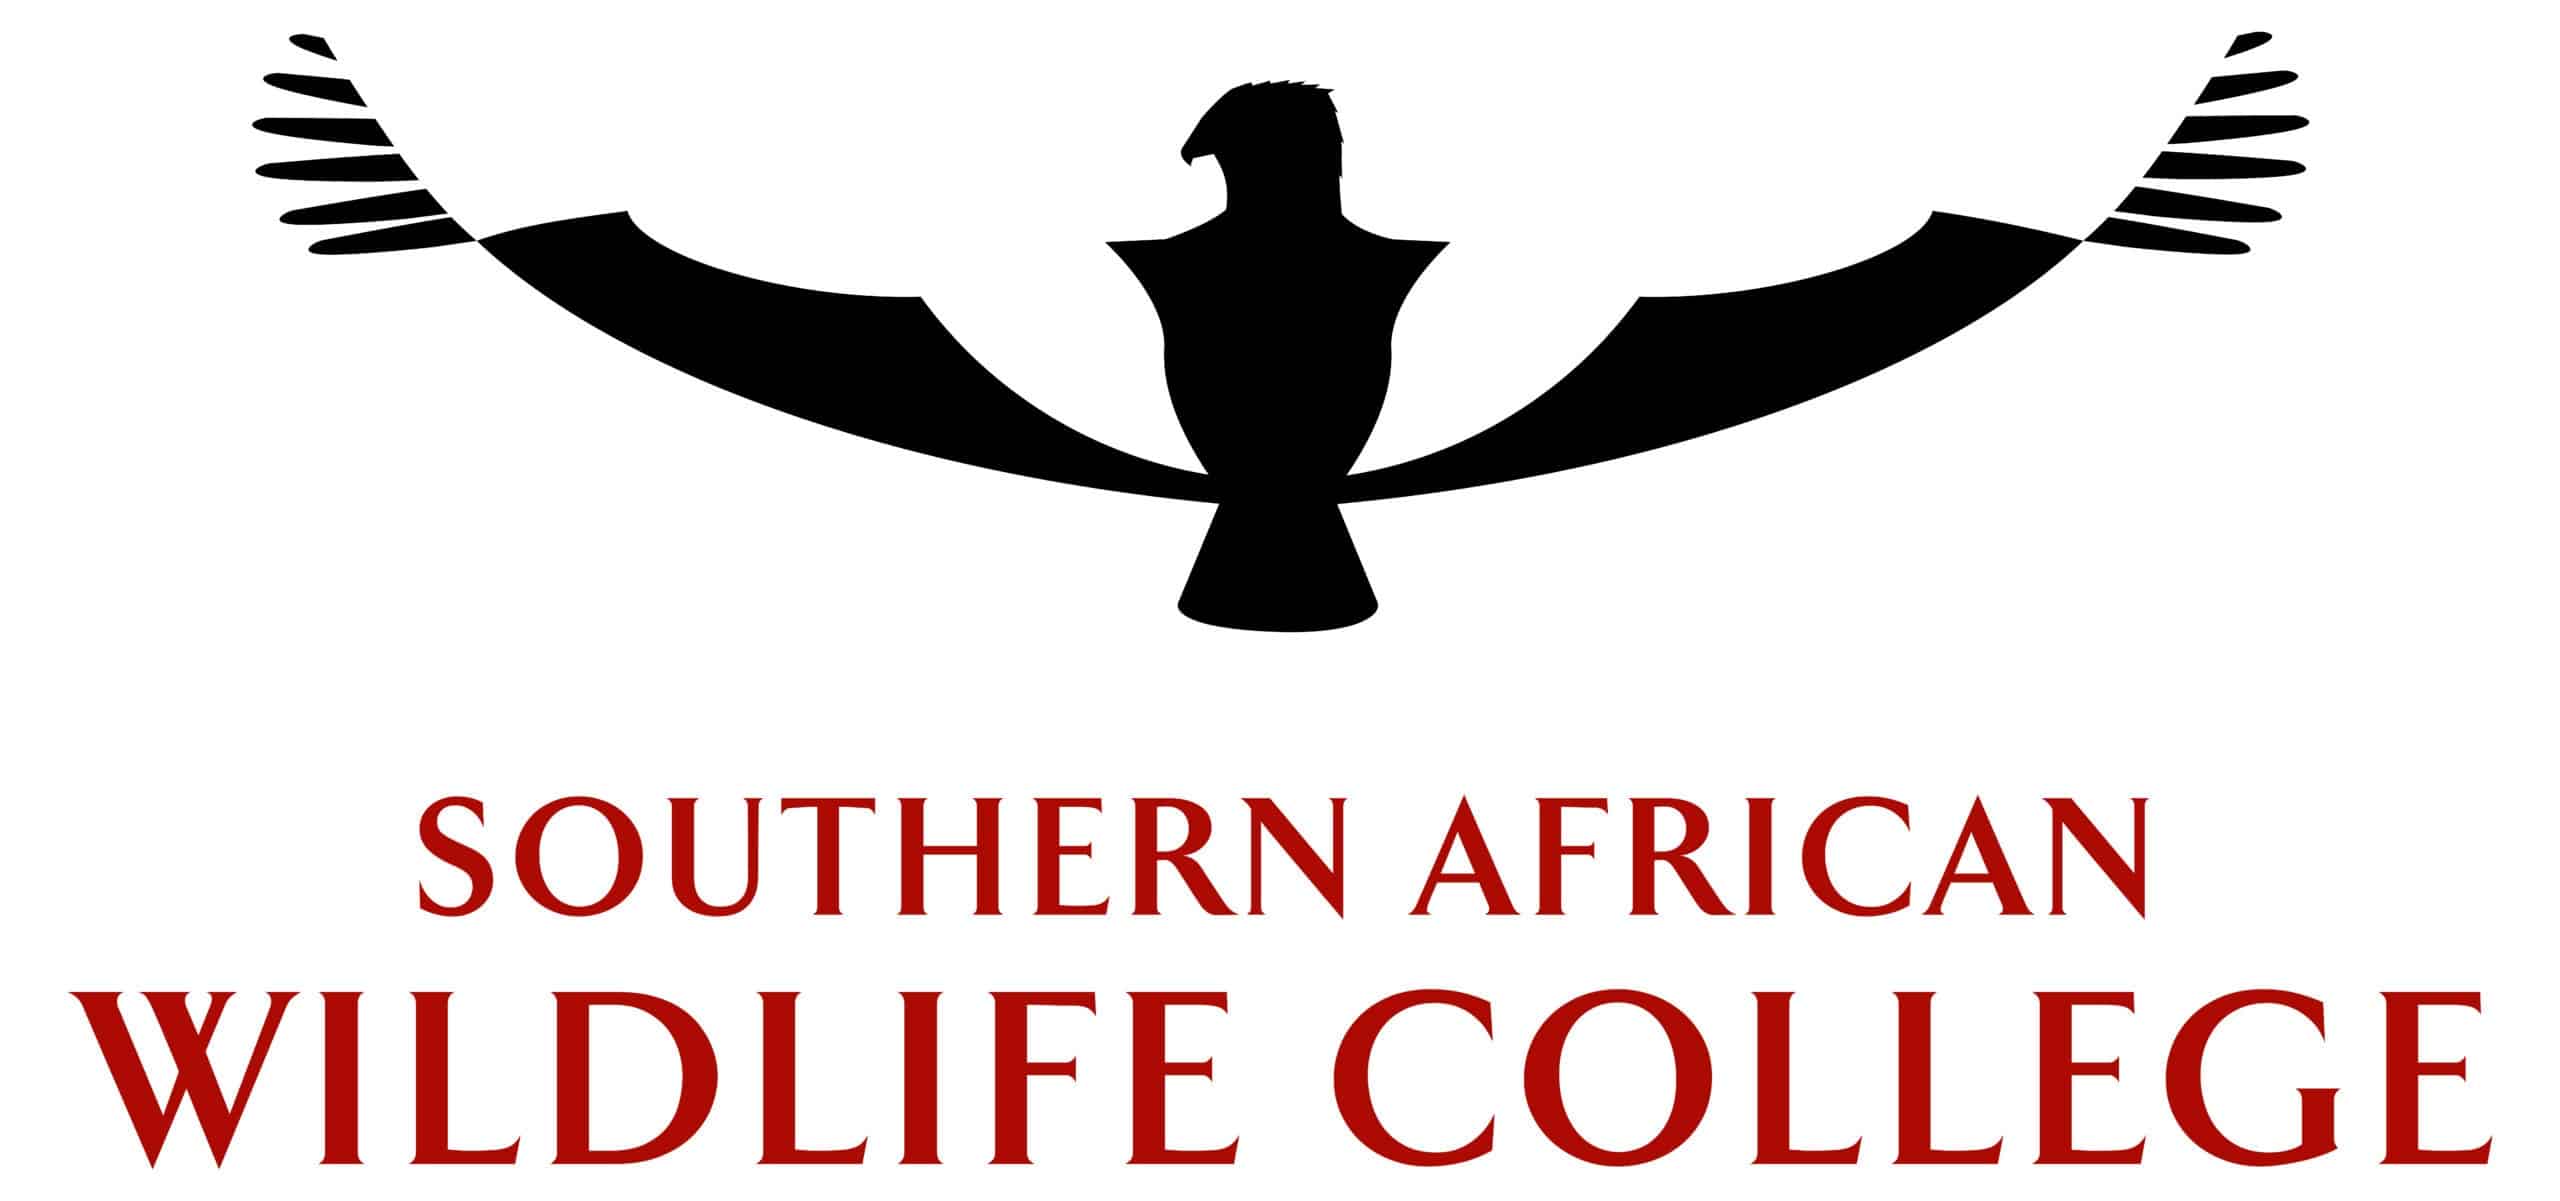 Southern African Wildlife College - GCC Partner Organization